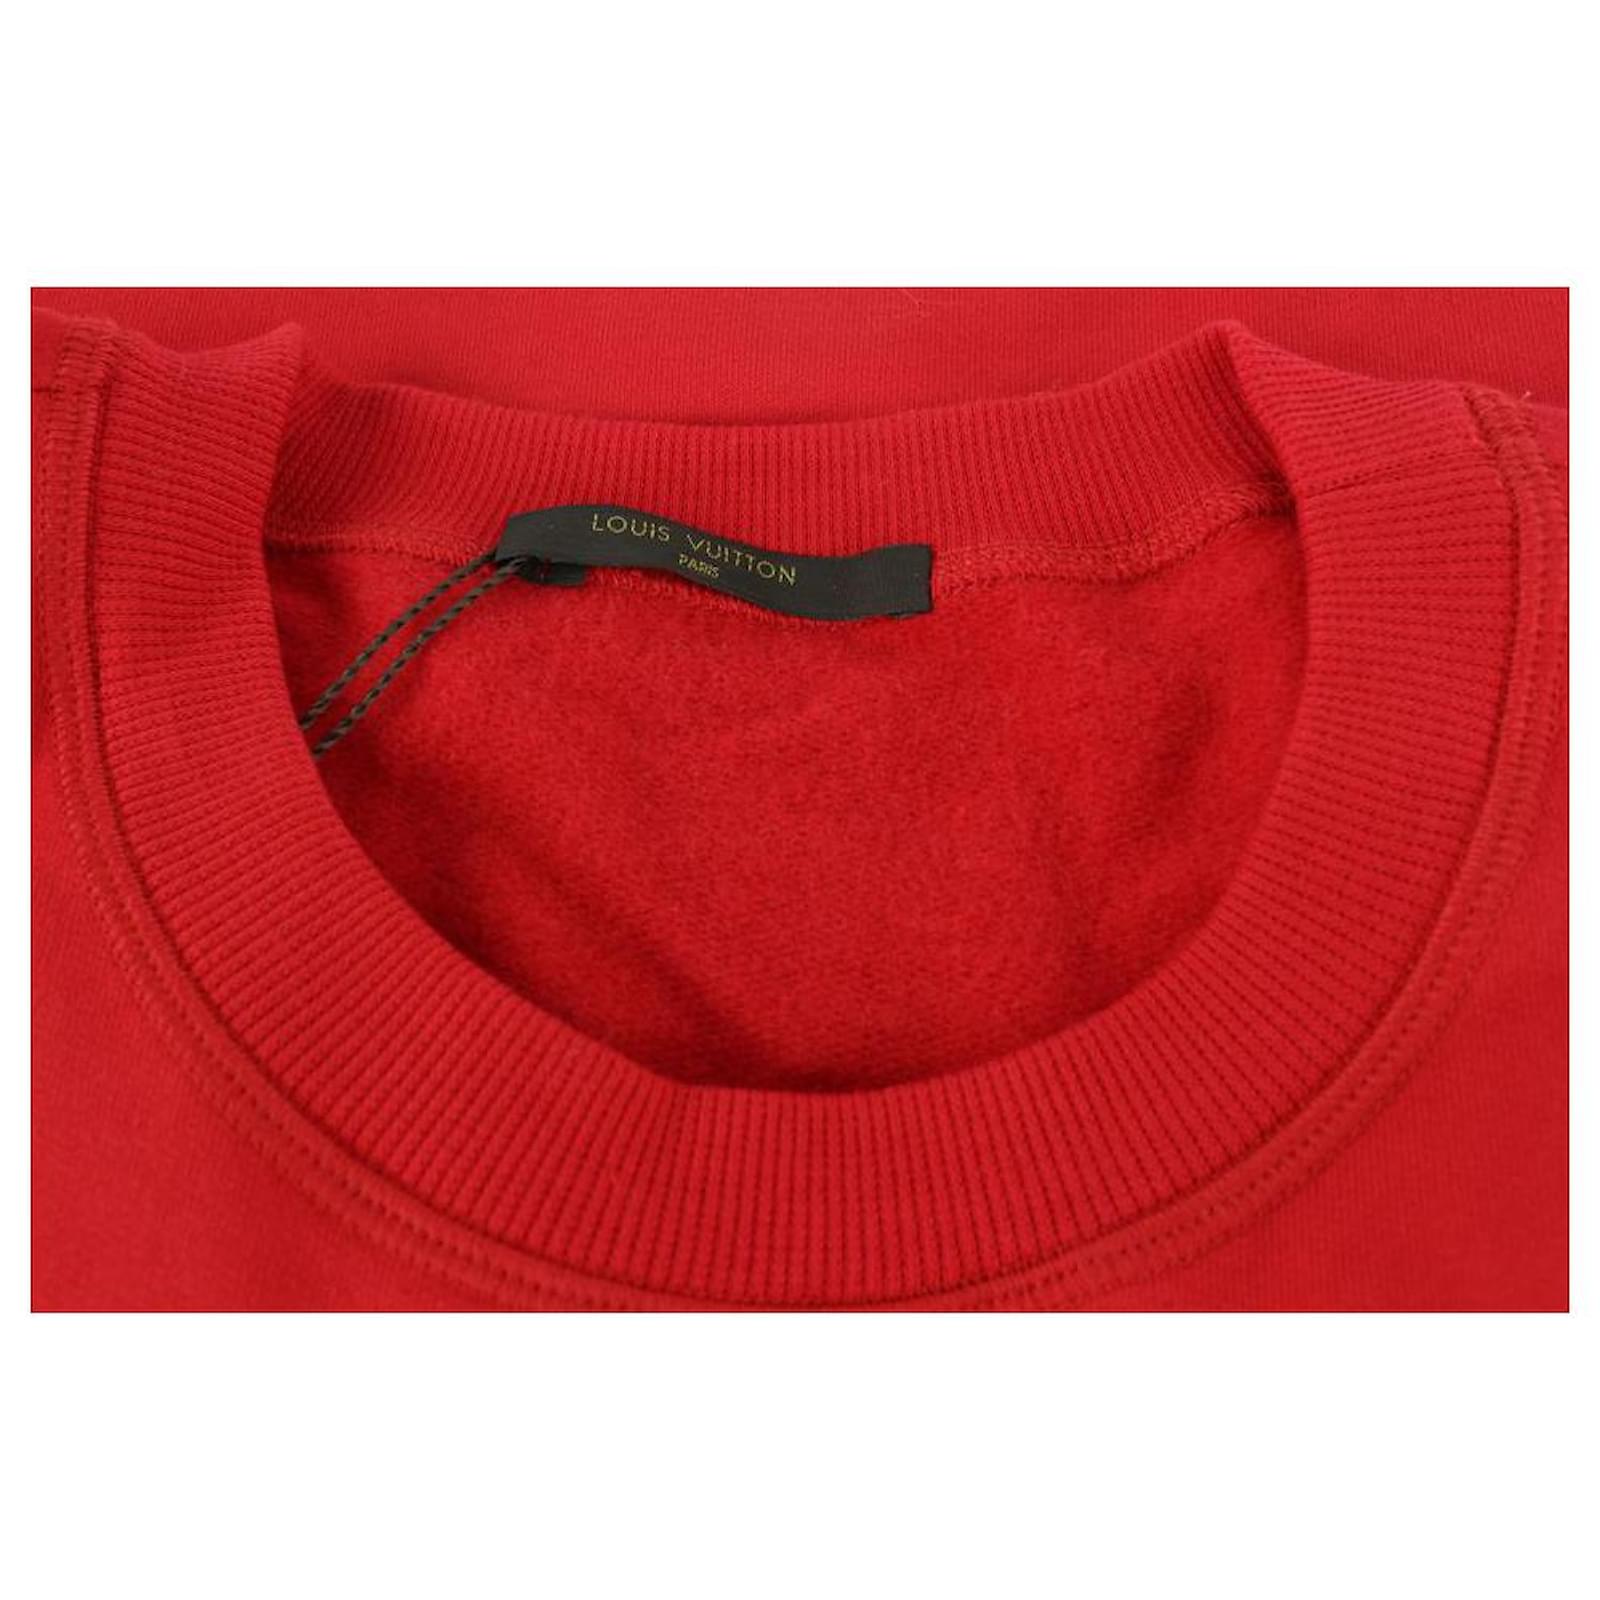 🔥SUPREME / LOUIS VUITTON ARC LOGO CREWNECK RED size XL